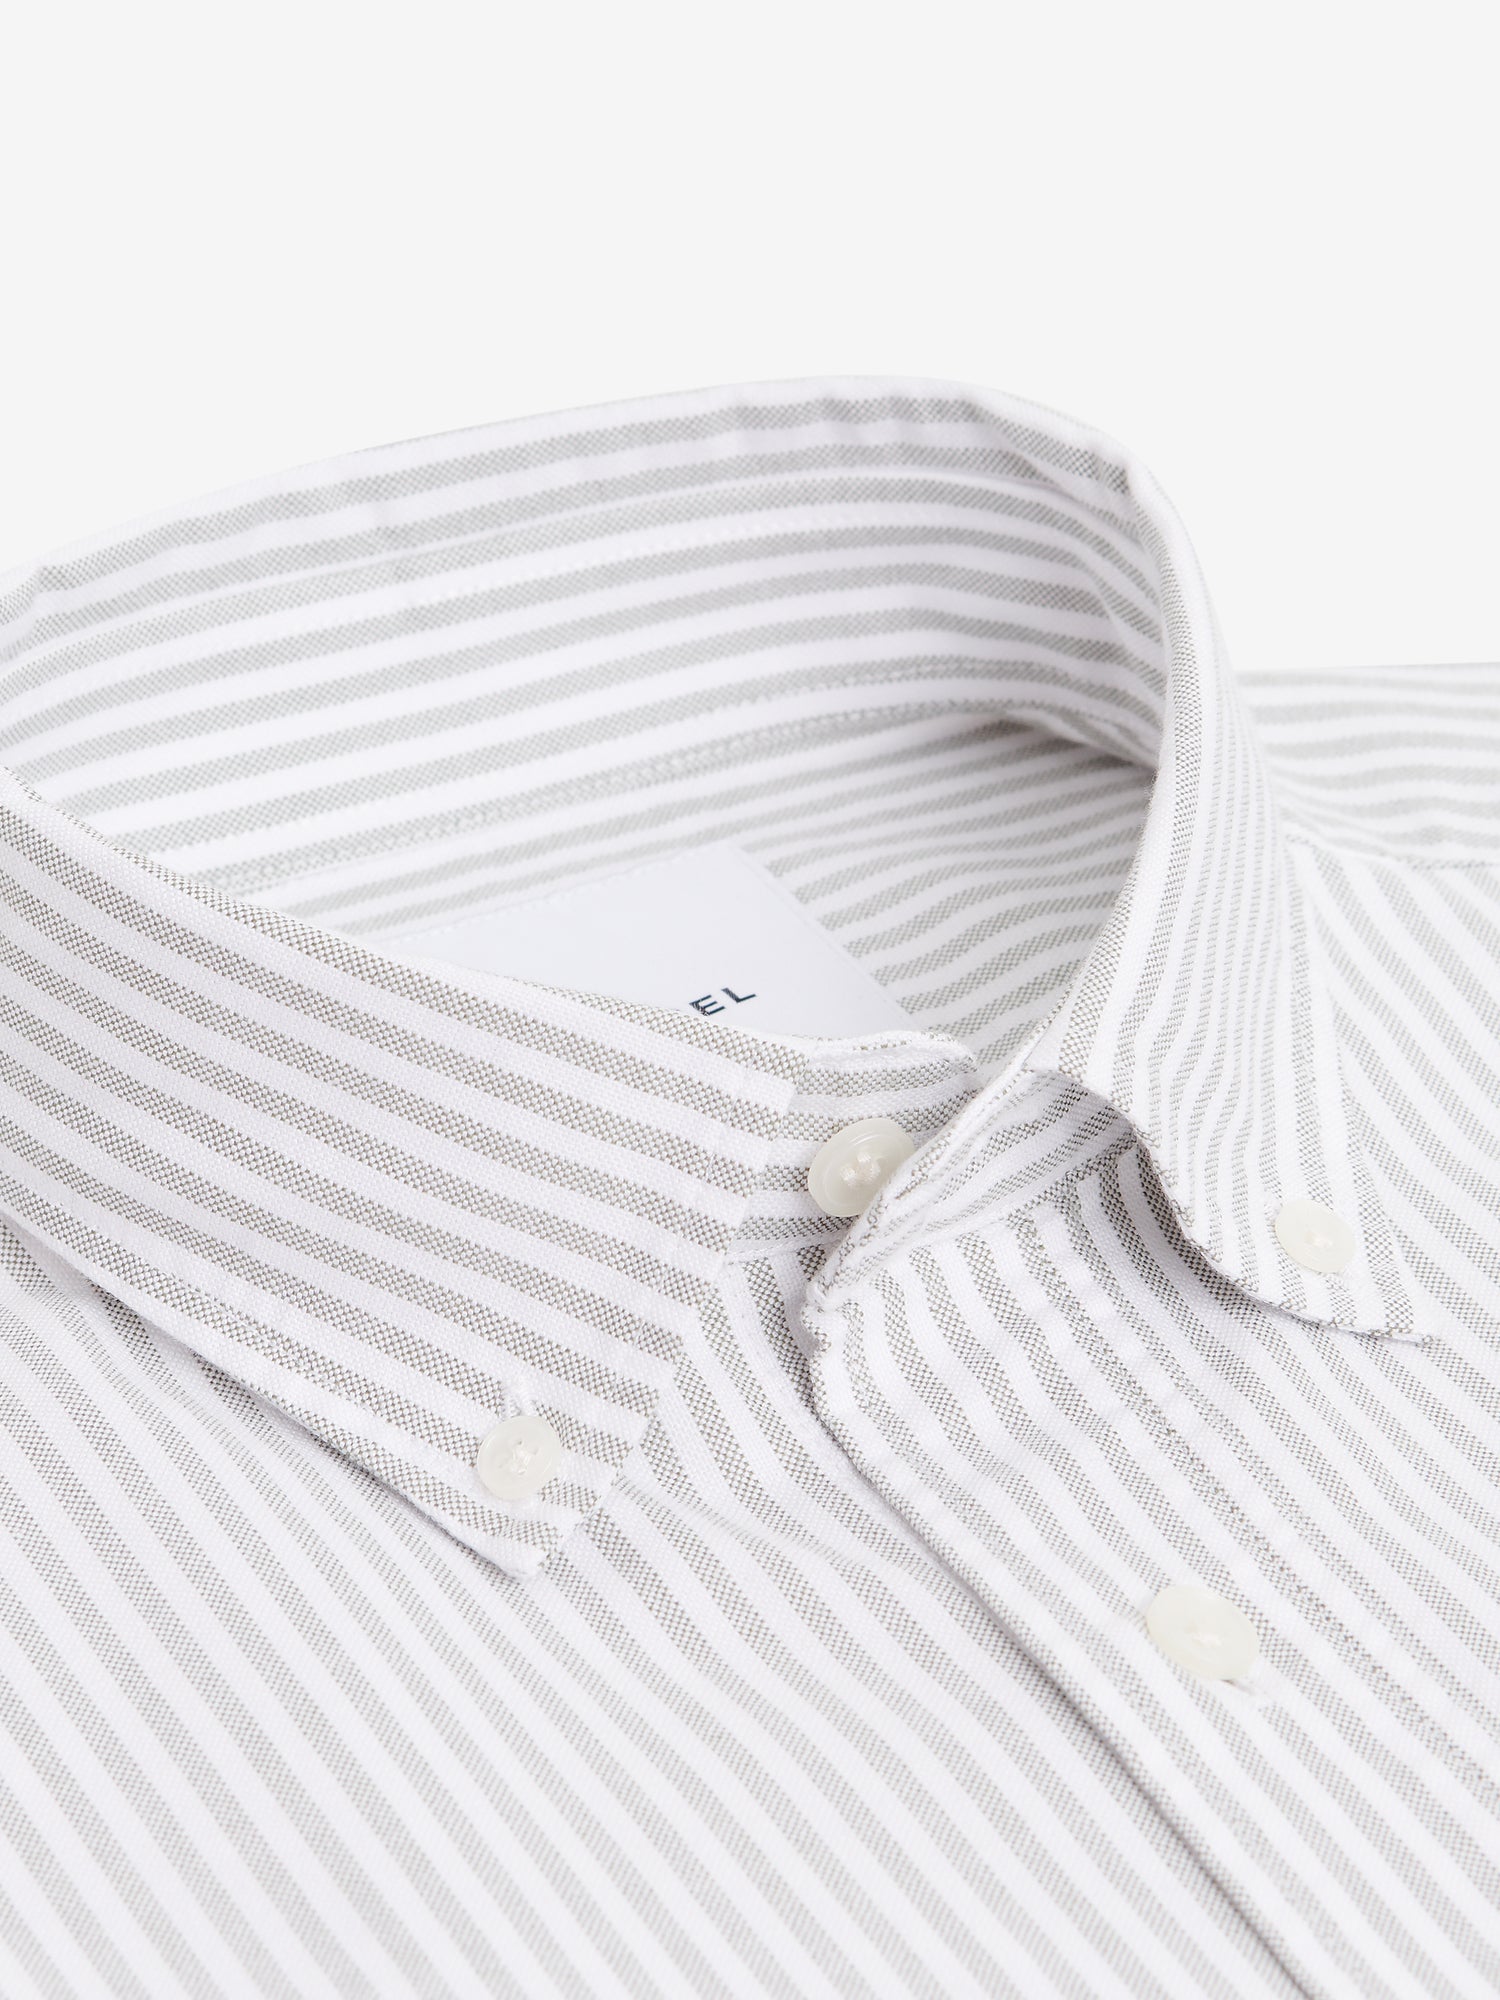 Felix Striped Oxford Cotton SH10208-OLV